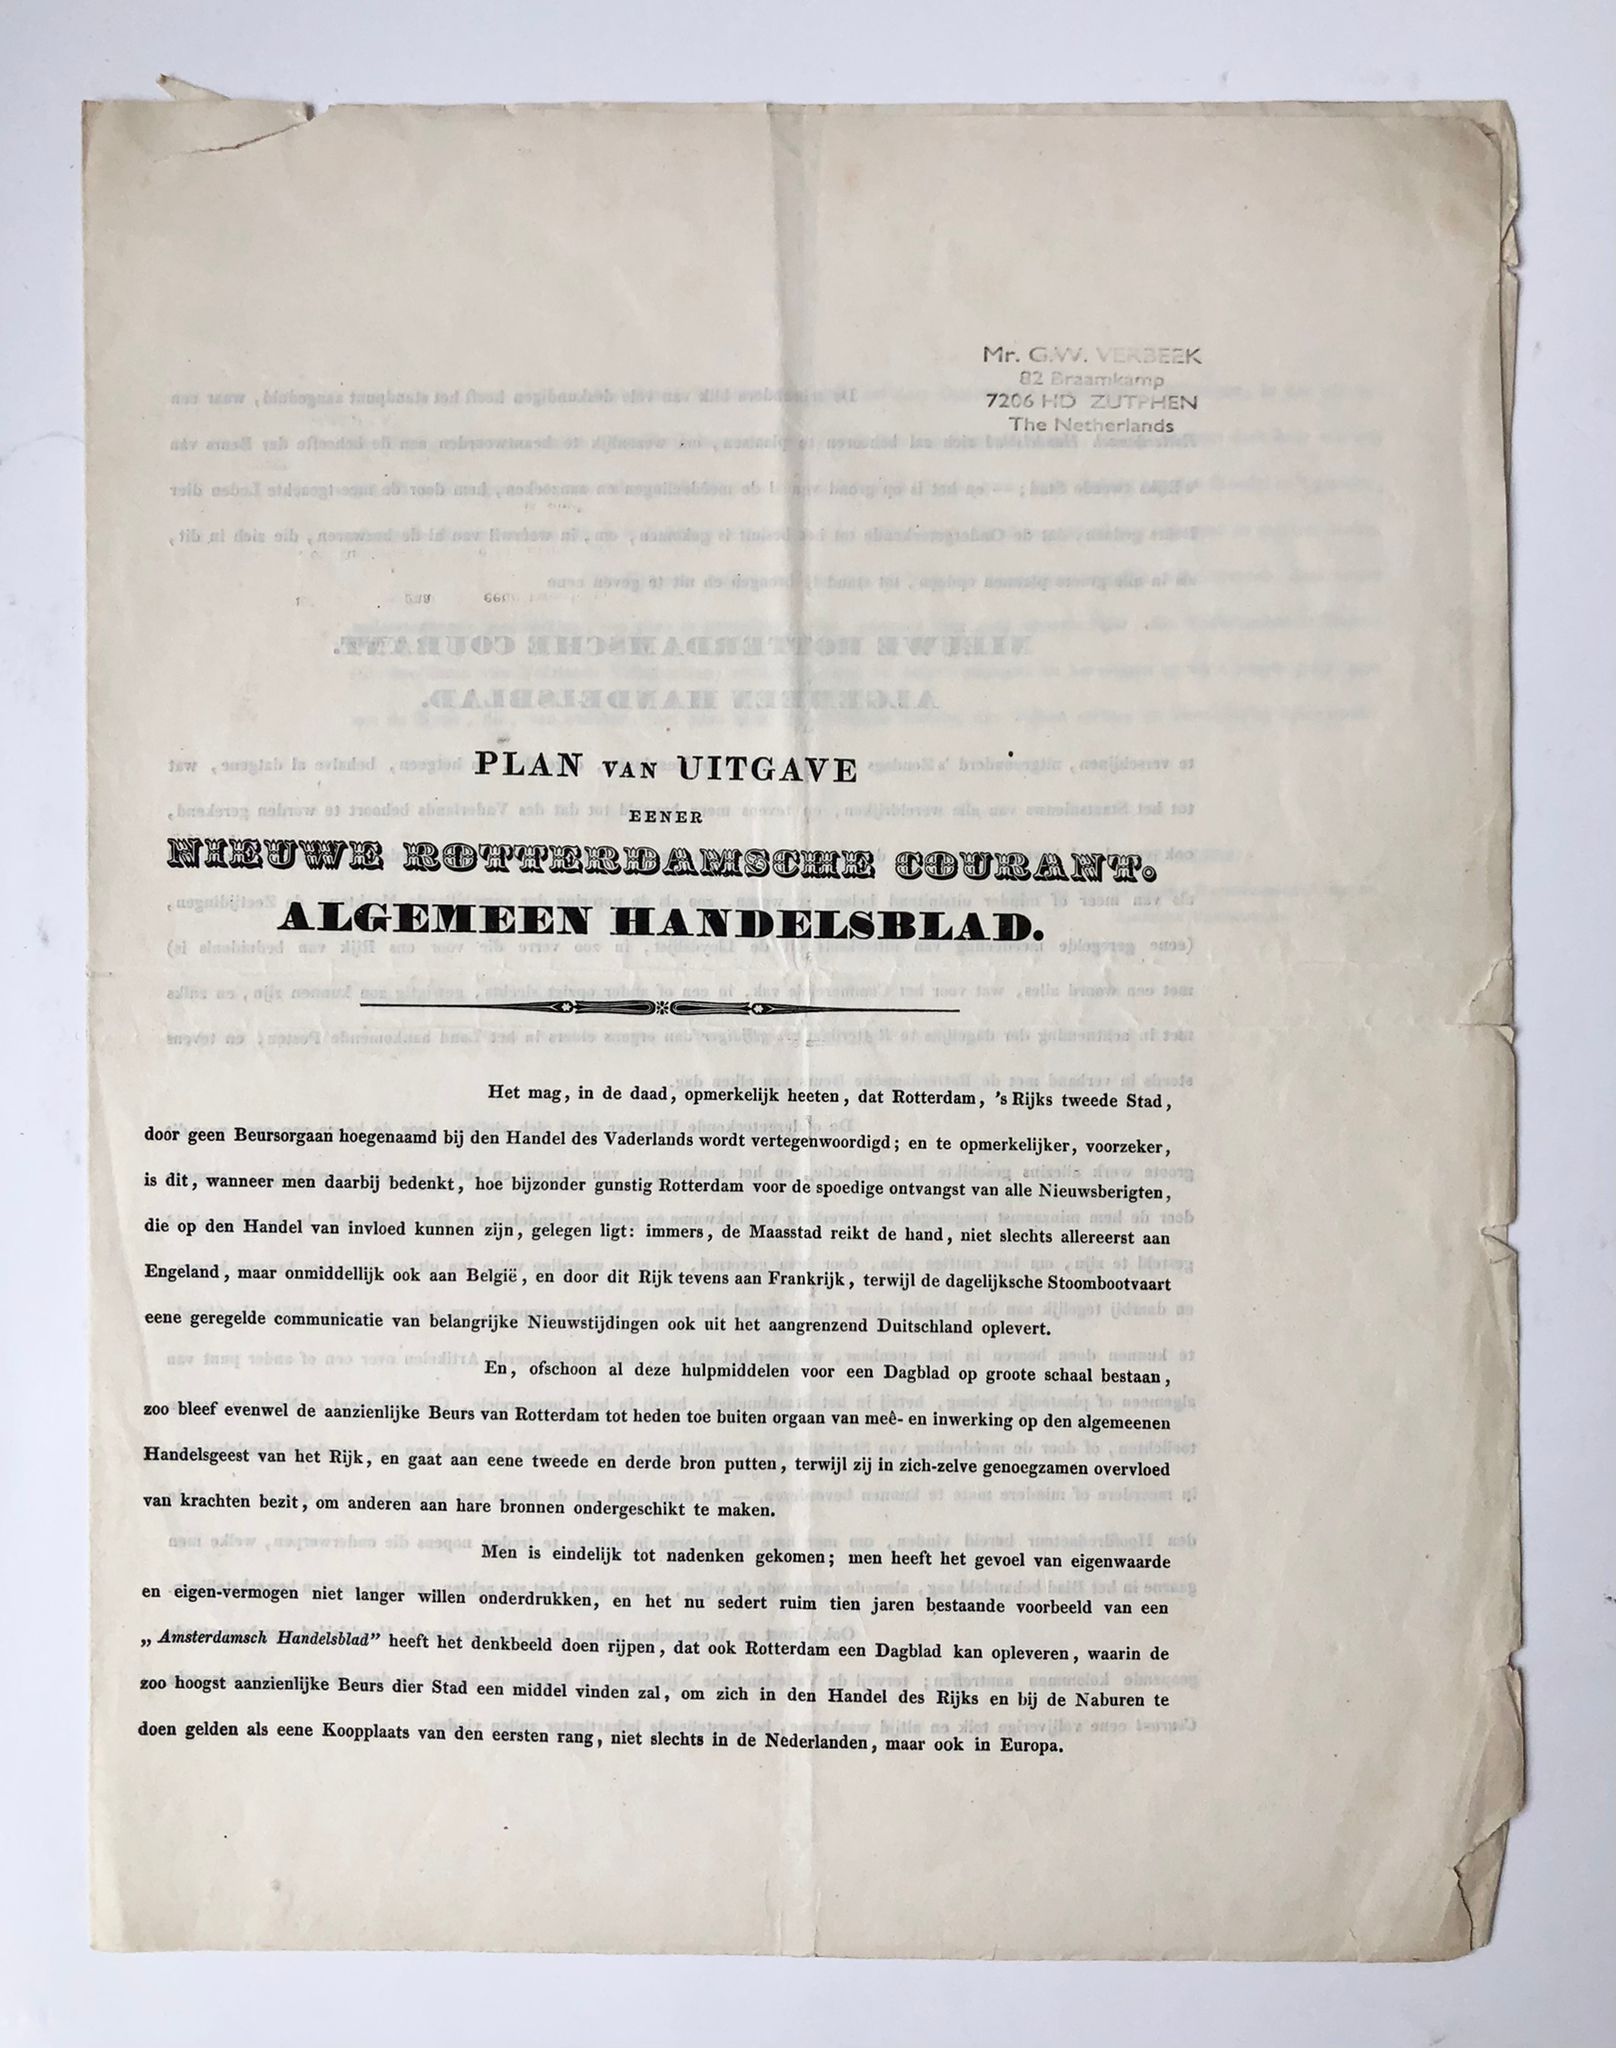 [Newspaper history, NRC, NIJGH, WAP] Plan van uitgave eener Nieuwe Rotterdamsche Courant, Algemeen Handelsblad, Rotterdam augustus 1842, getekend H. Nijgh. 4°, 3 pp, printed.